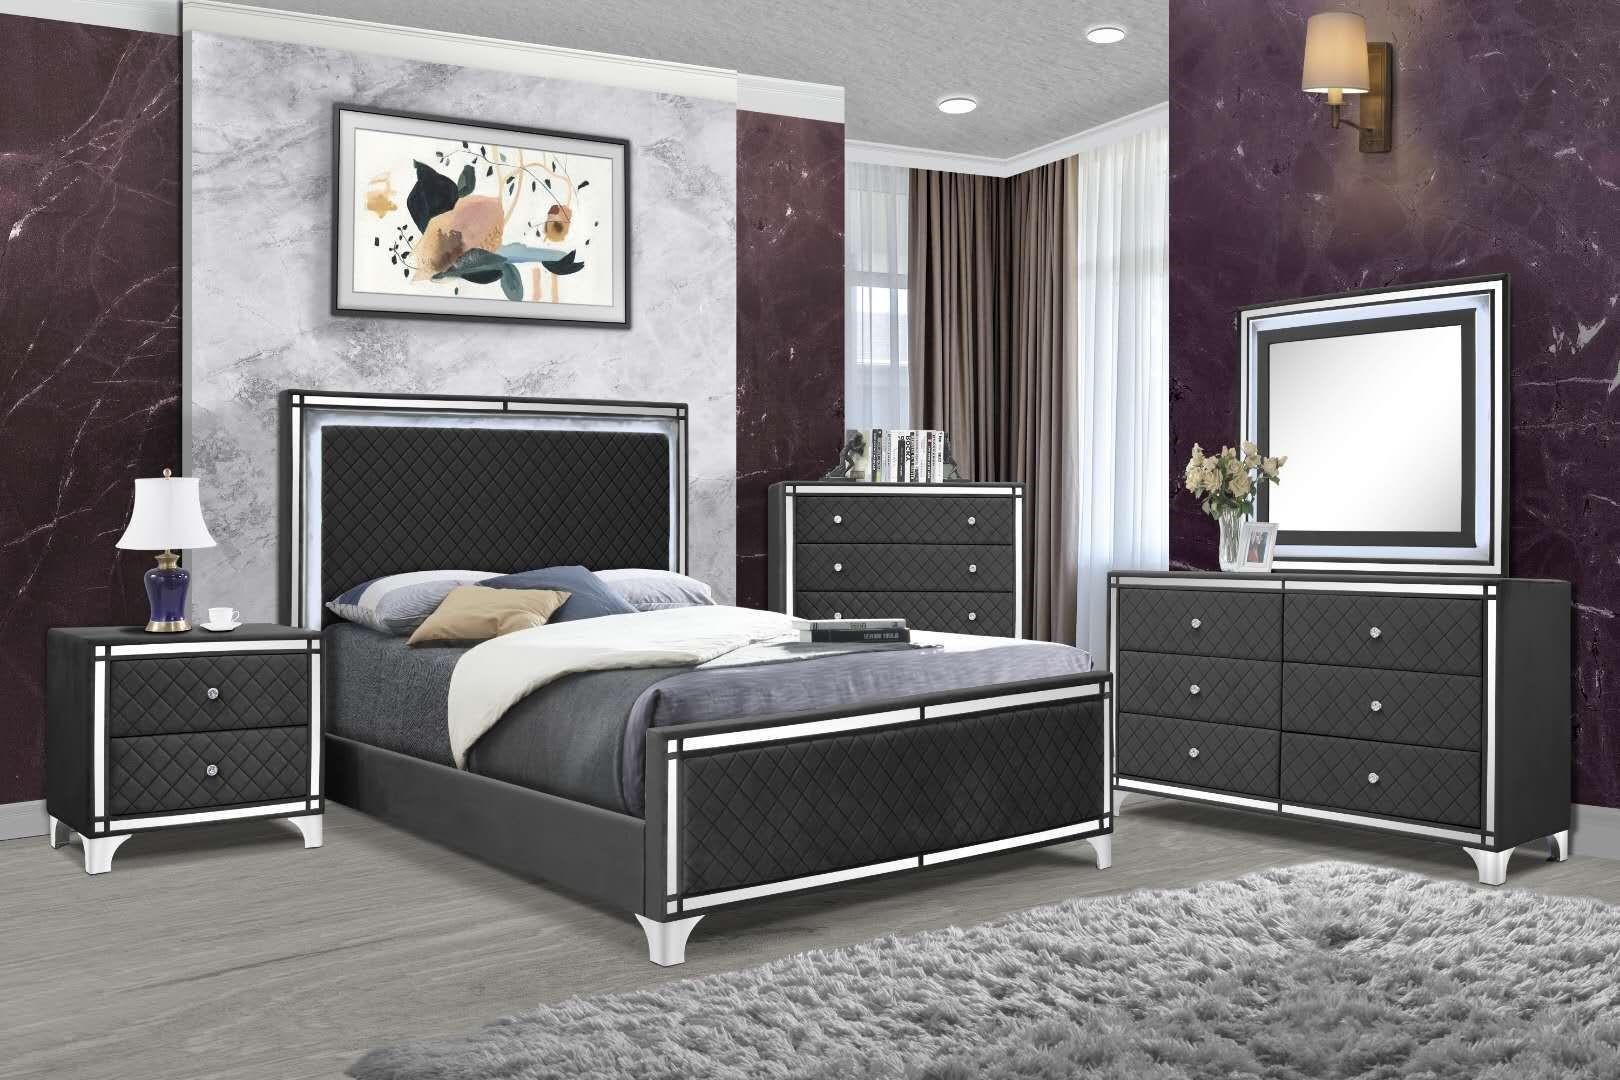 Aria King bed Dresser & Mirror,Lifestyle